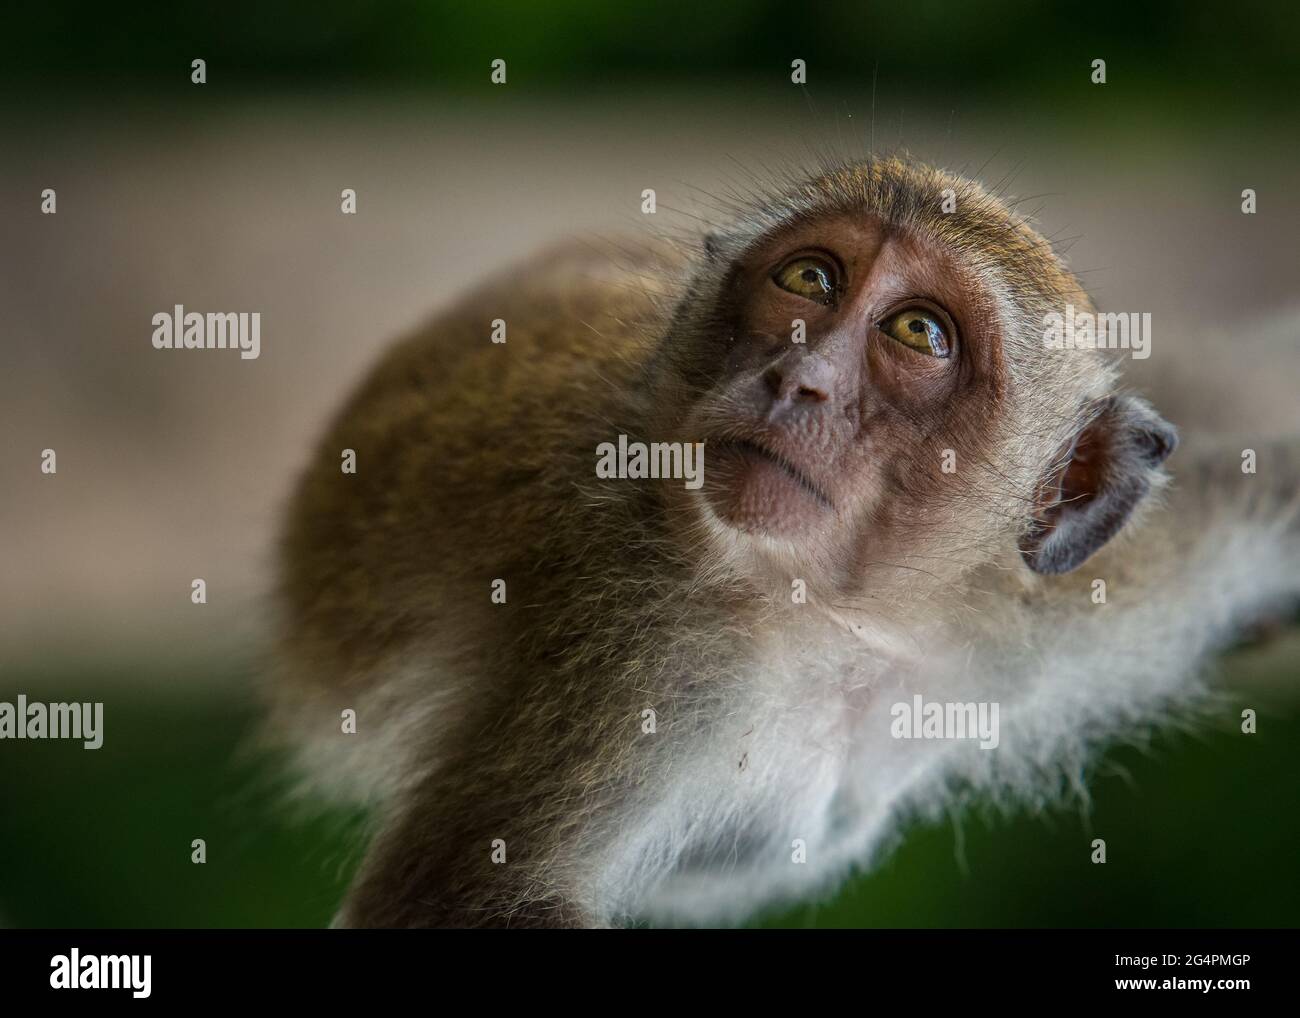 Crab eating Macaque Monkey Stock Photo